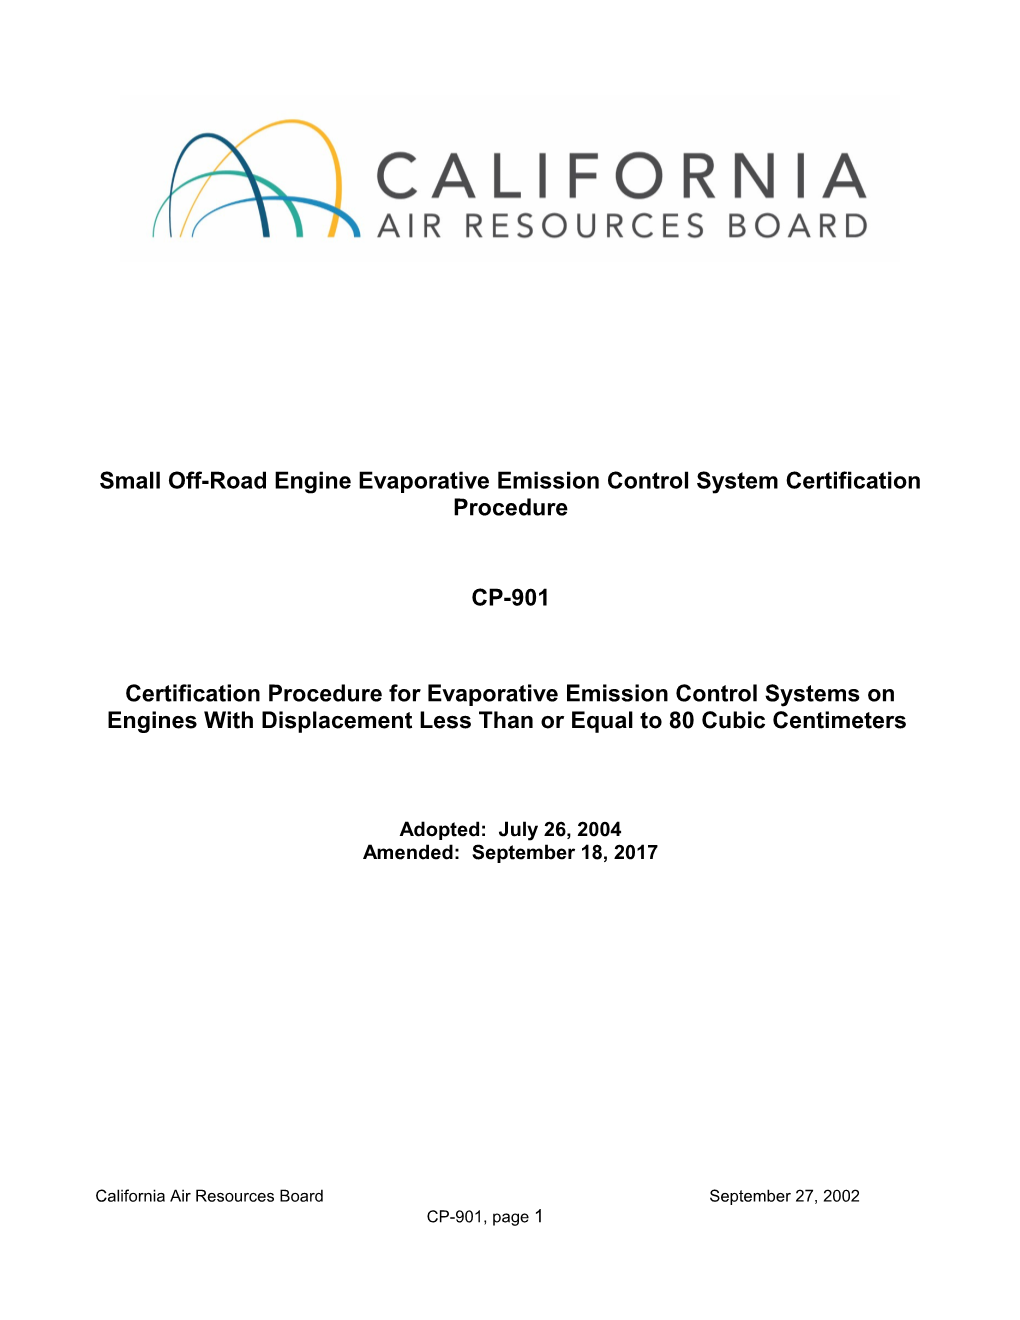 Small Off-Road Engine Evaporative Emission Control System Certification Procedure